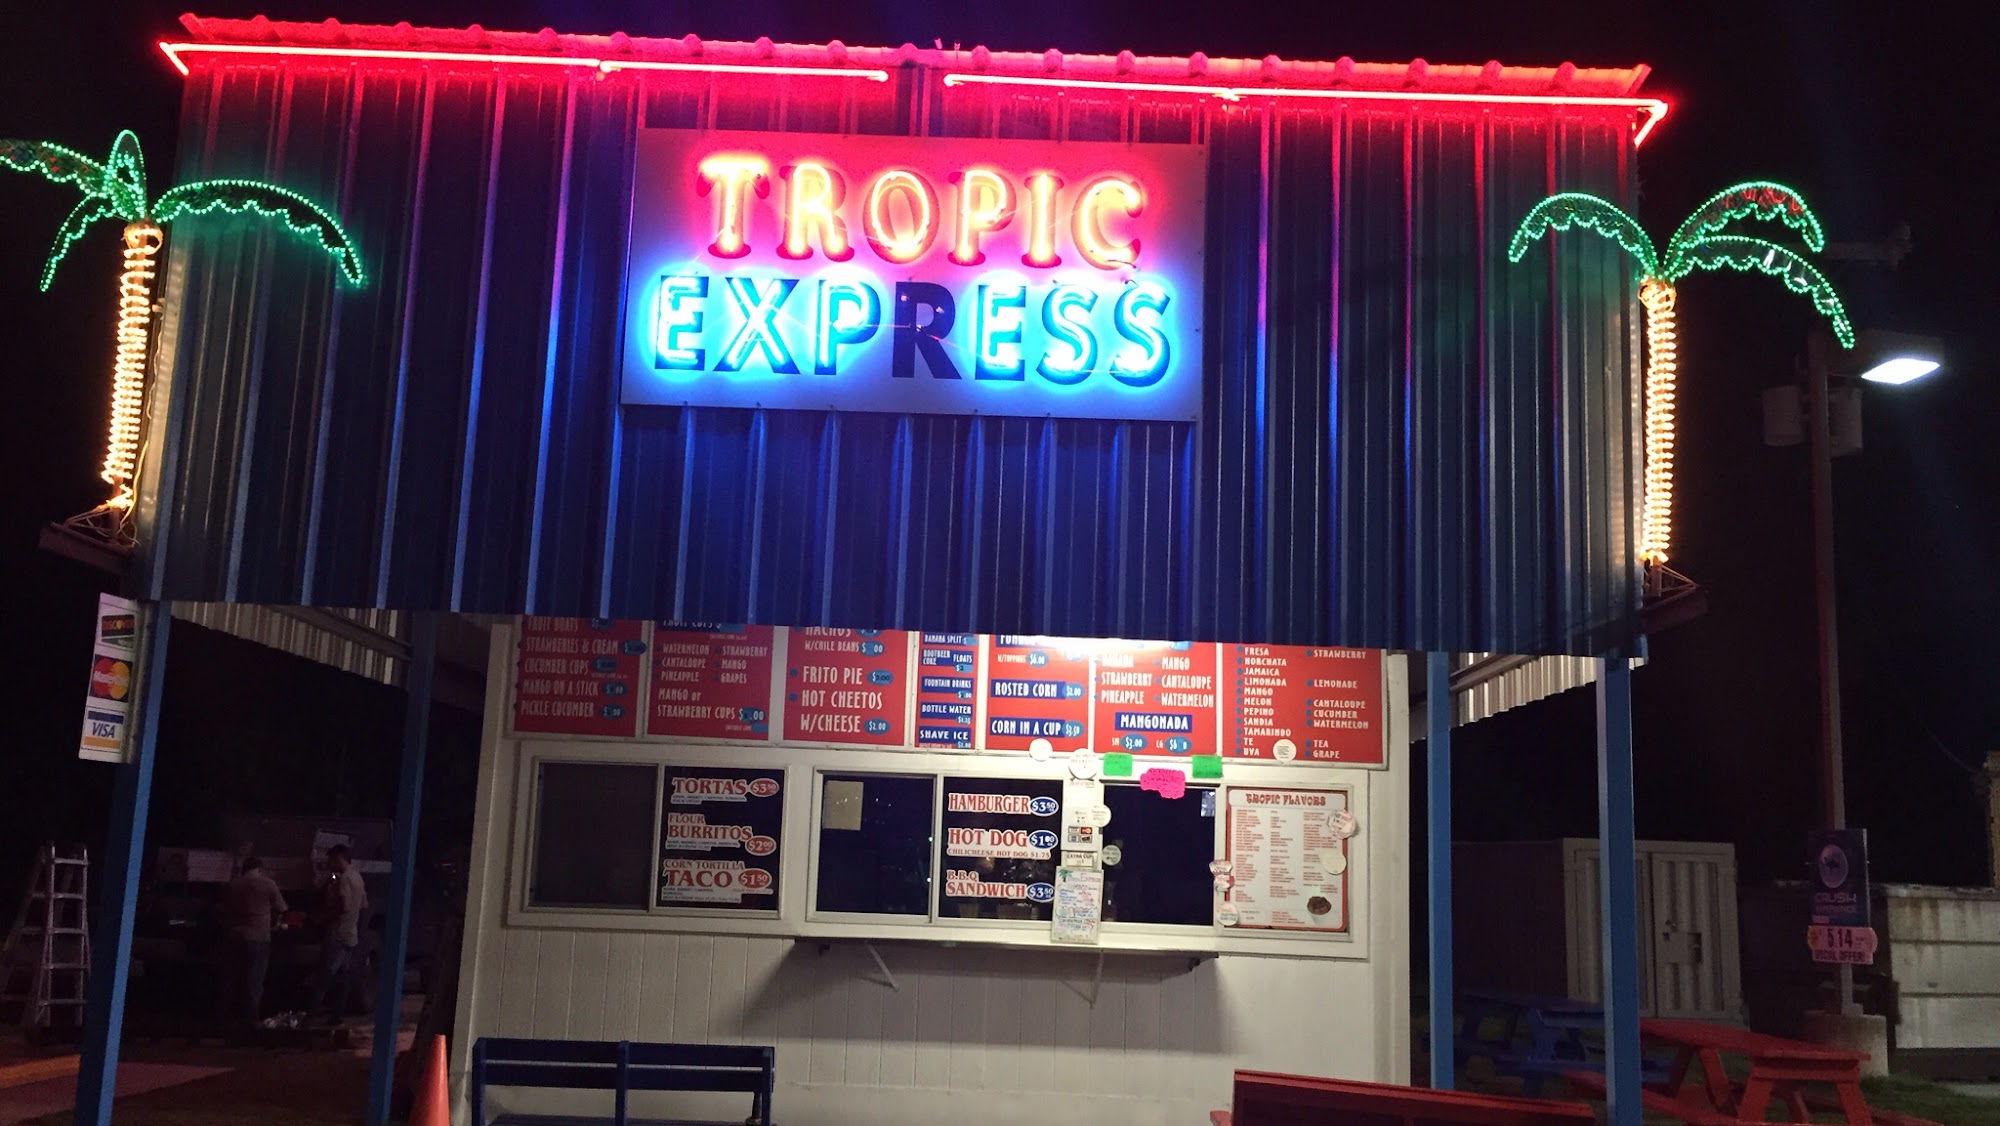 Tropic Express